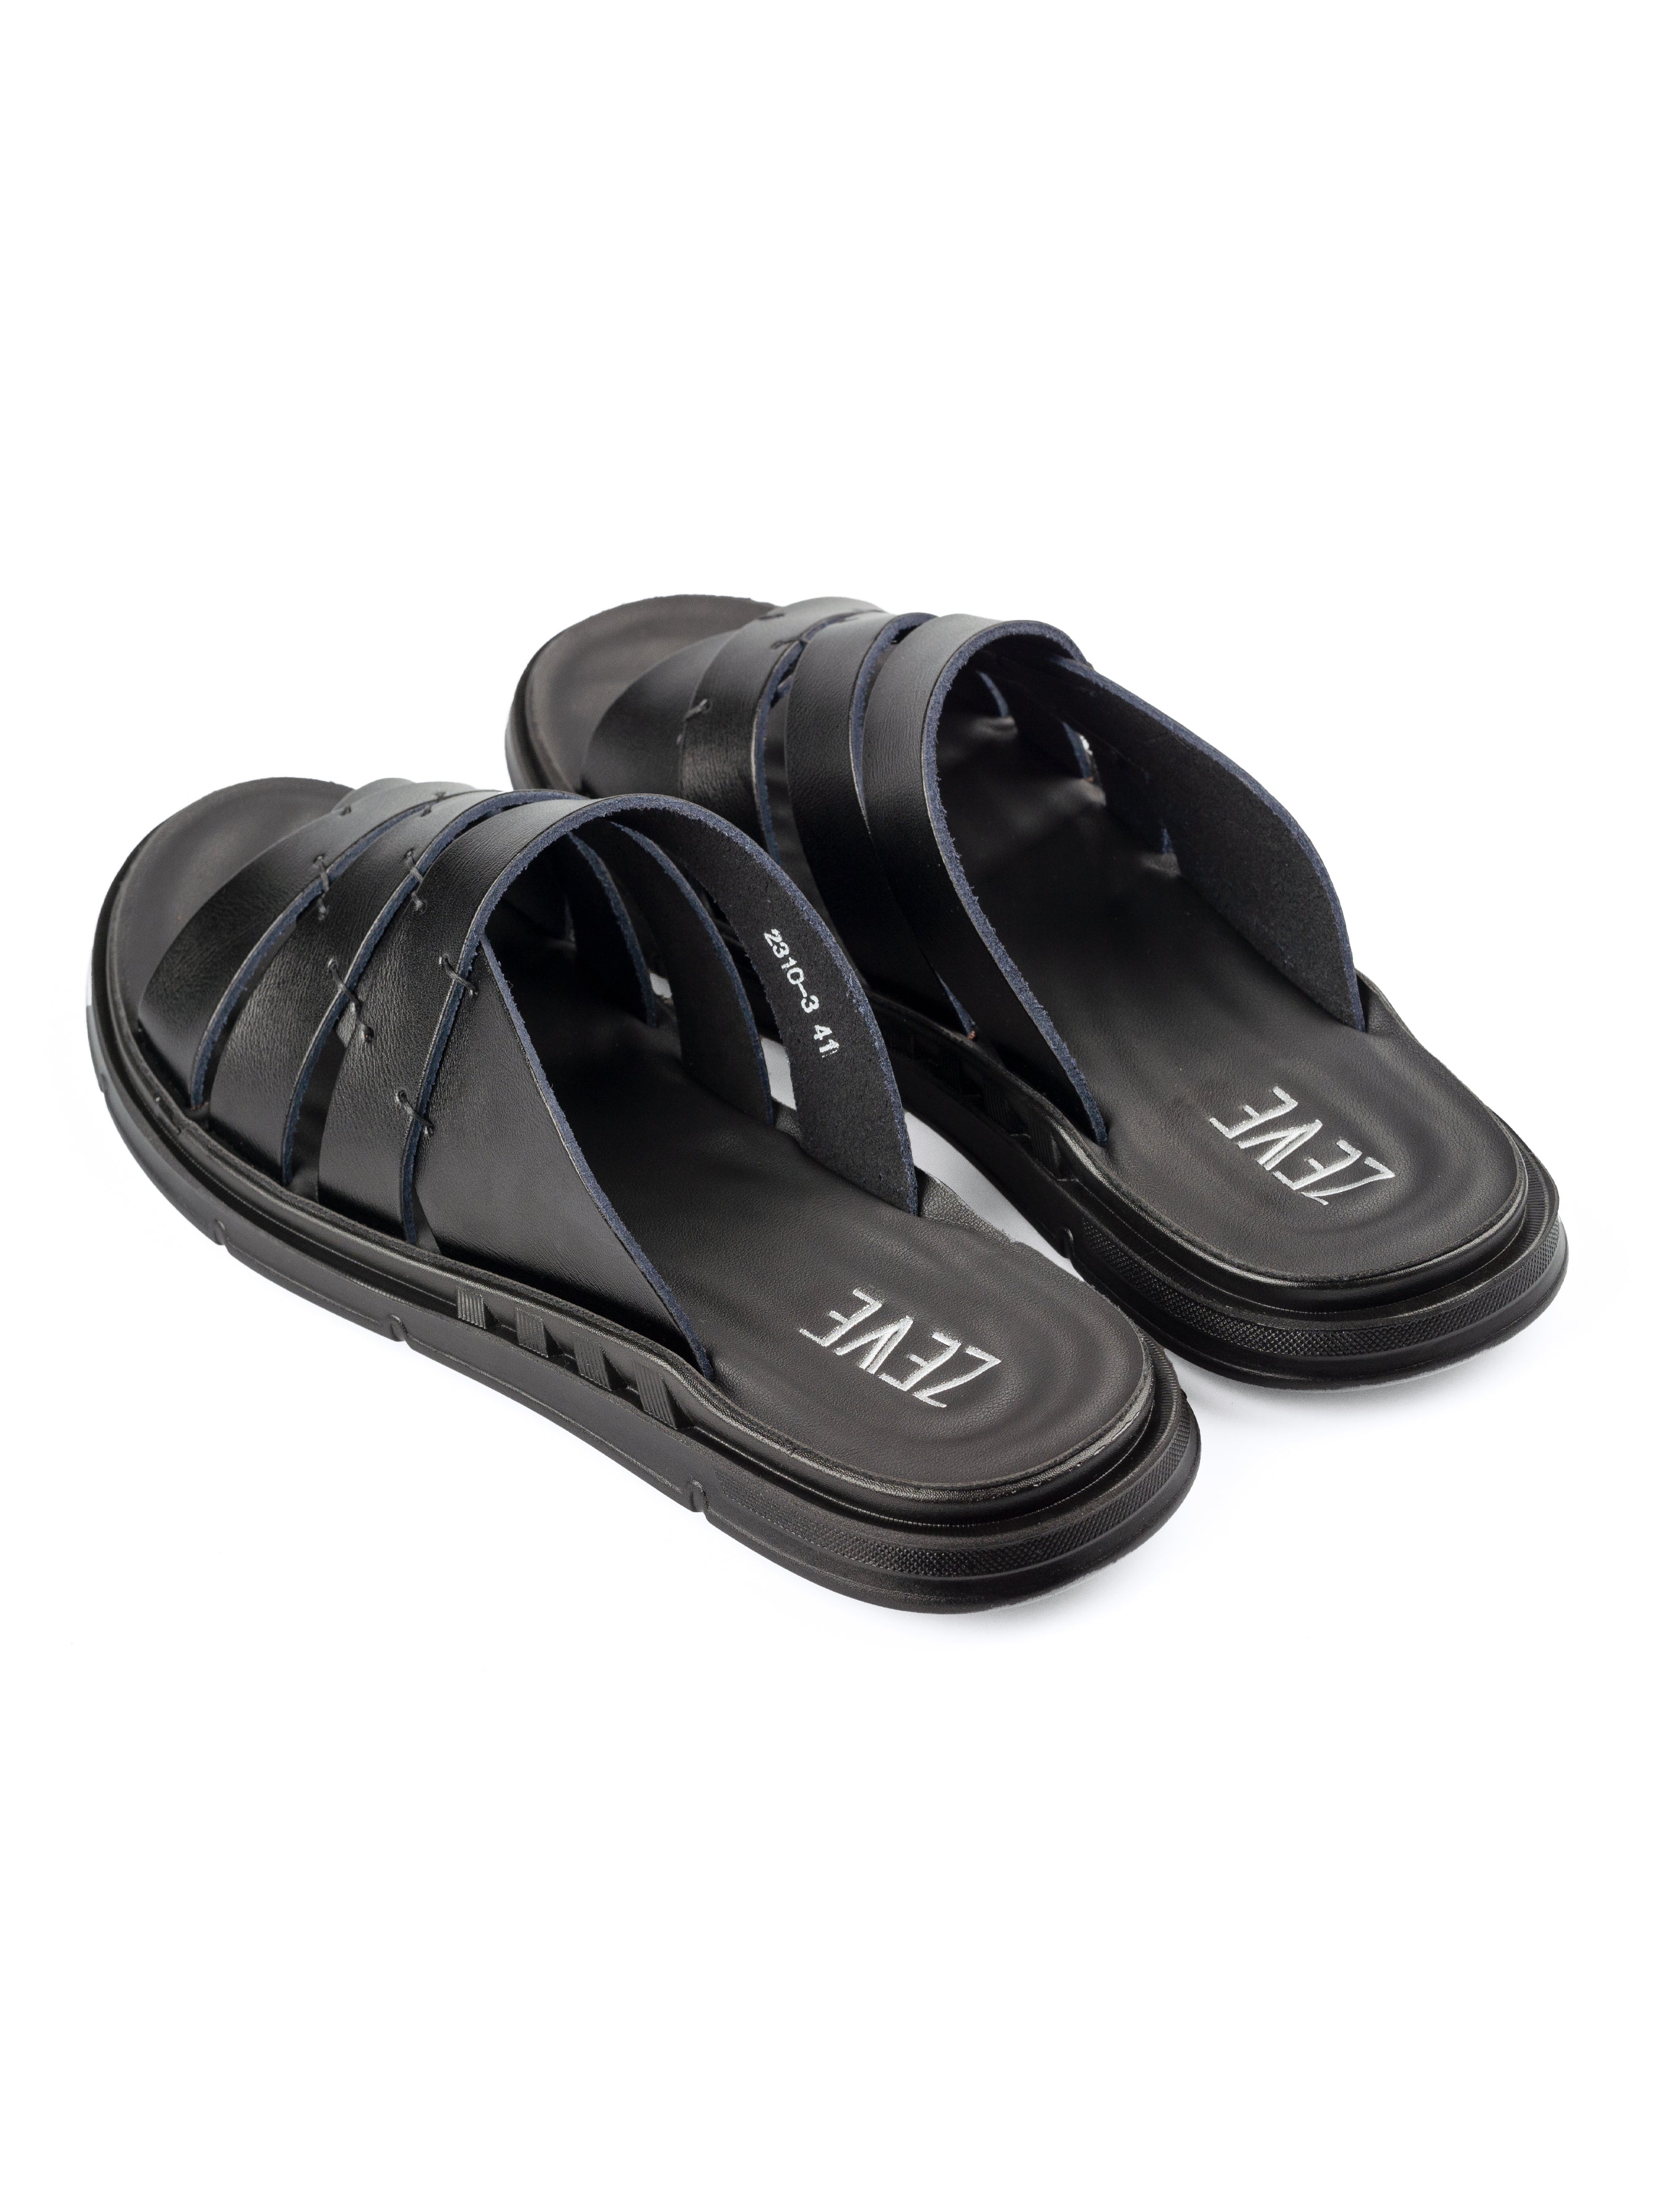 Hael Sandal - Black Leather